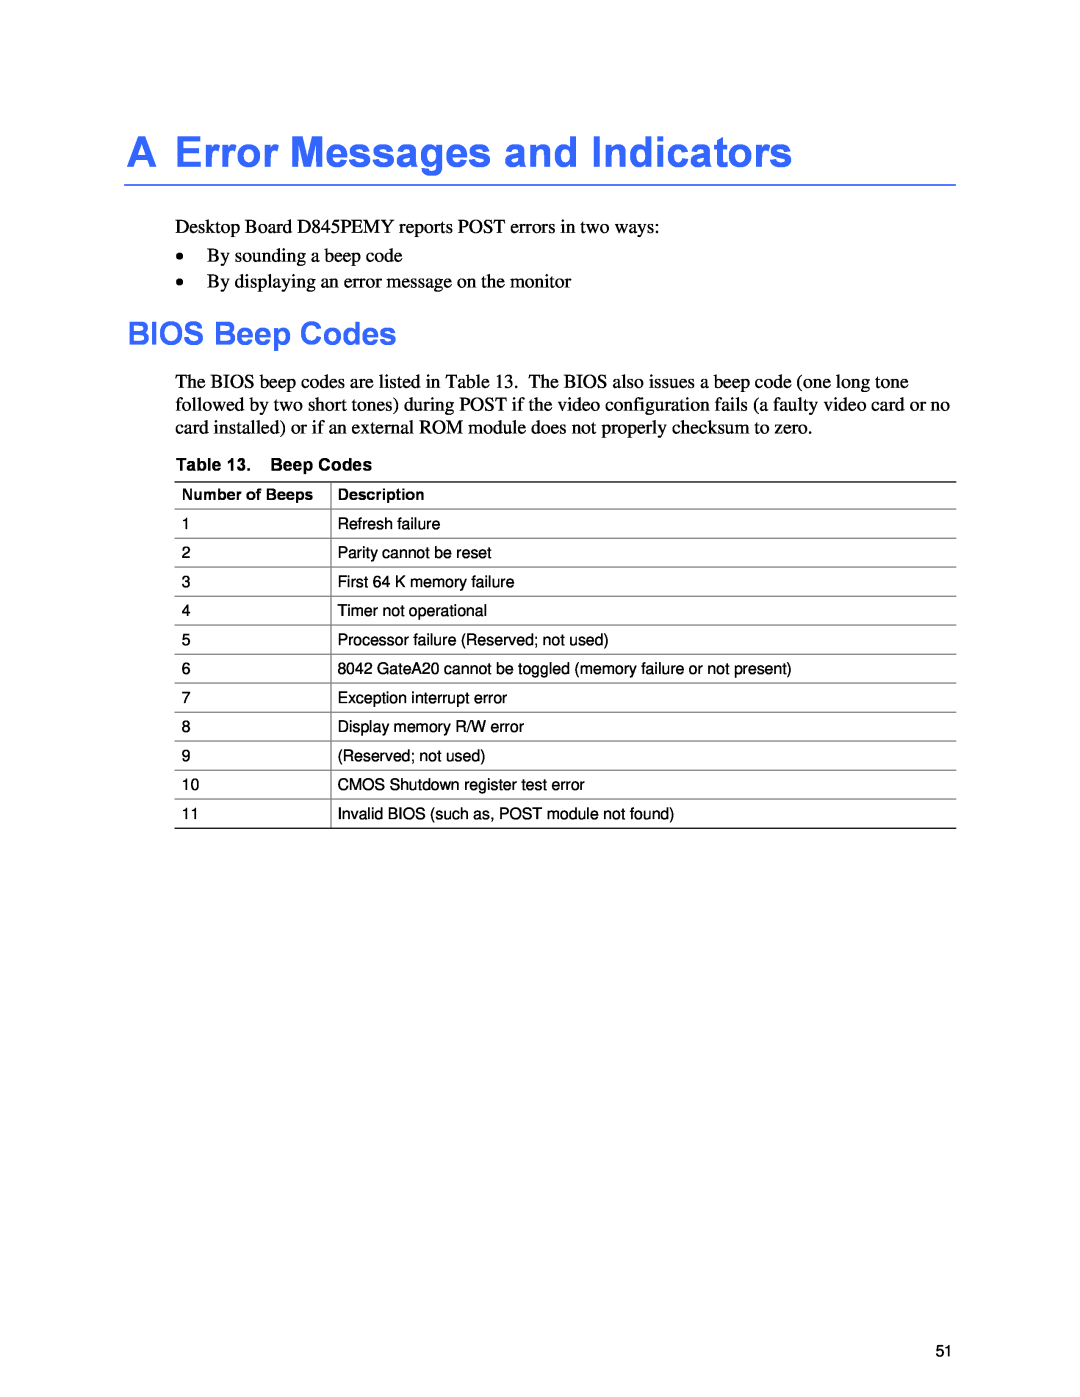 Intel D845PEMY manual A Error Messages and Indicators, BIOS Beep Codes 